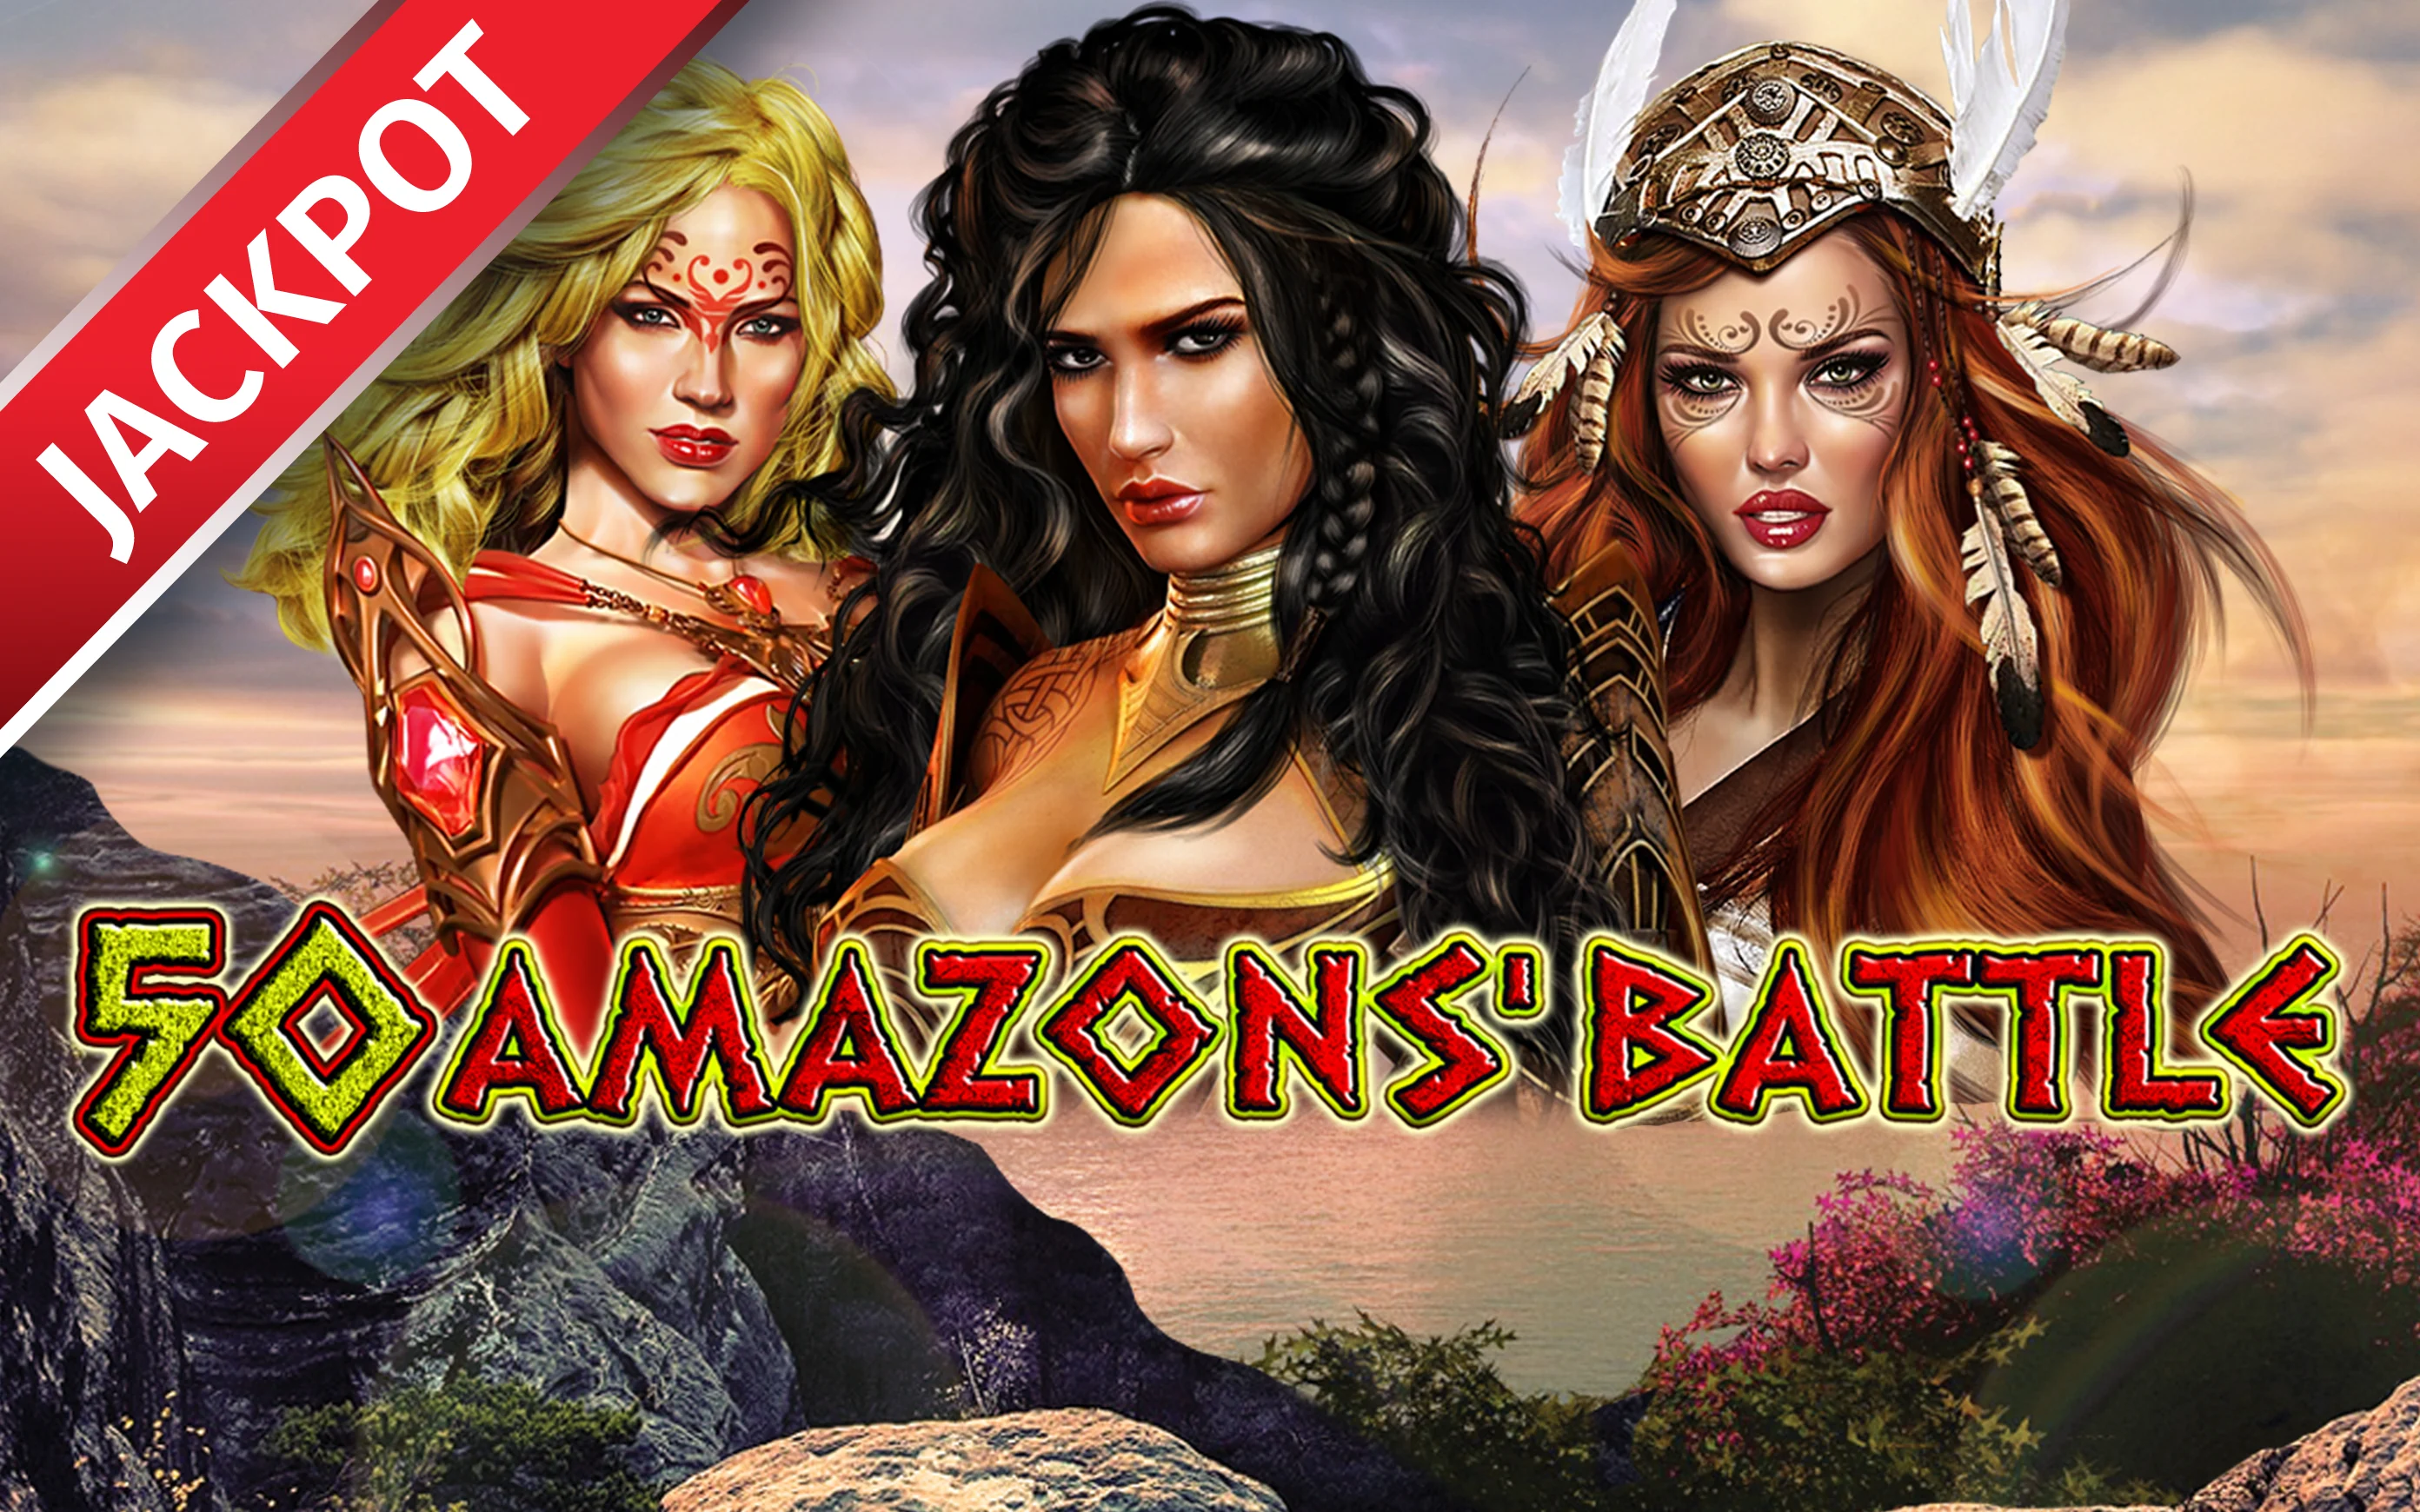 Play 50 Amazons’ Battle on Starcasino.be online casino